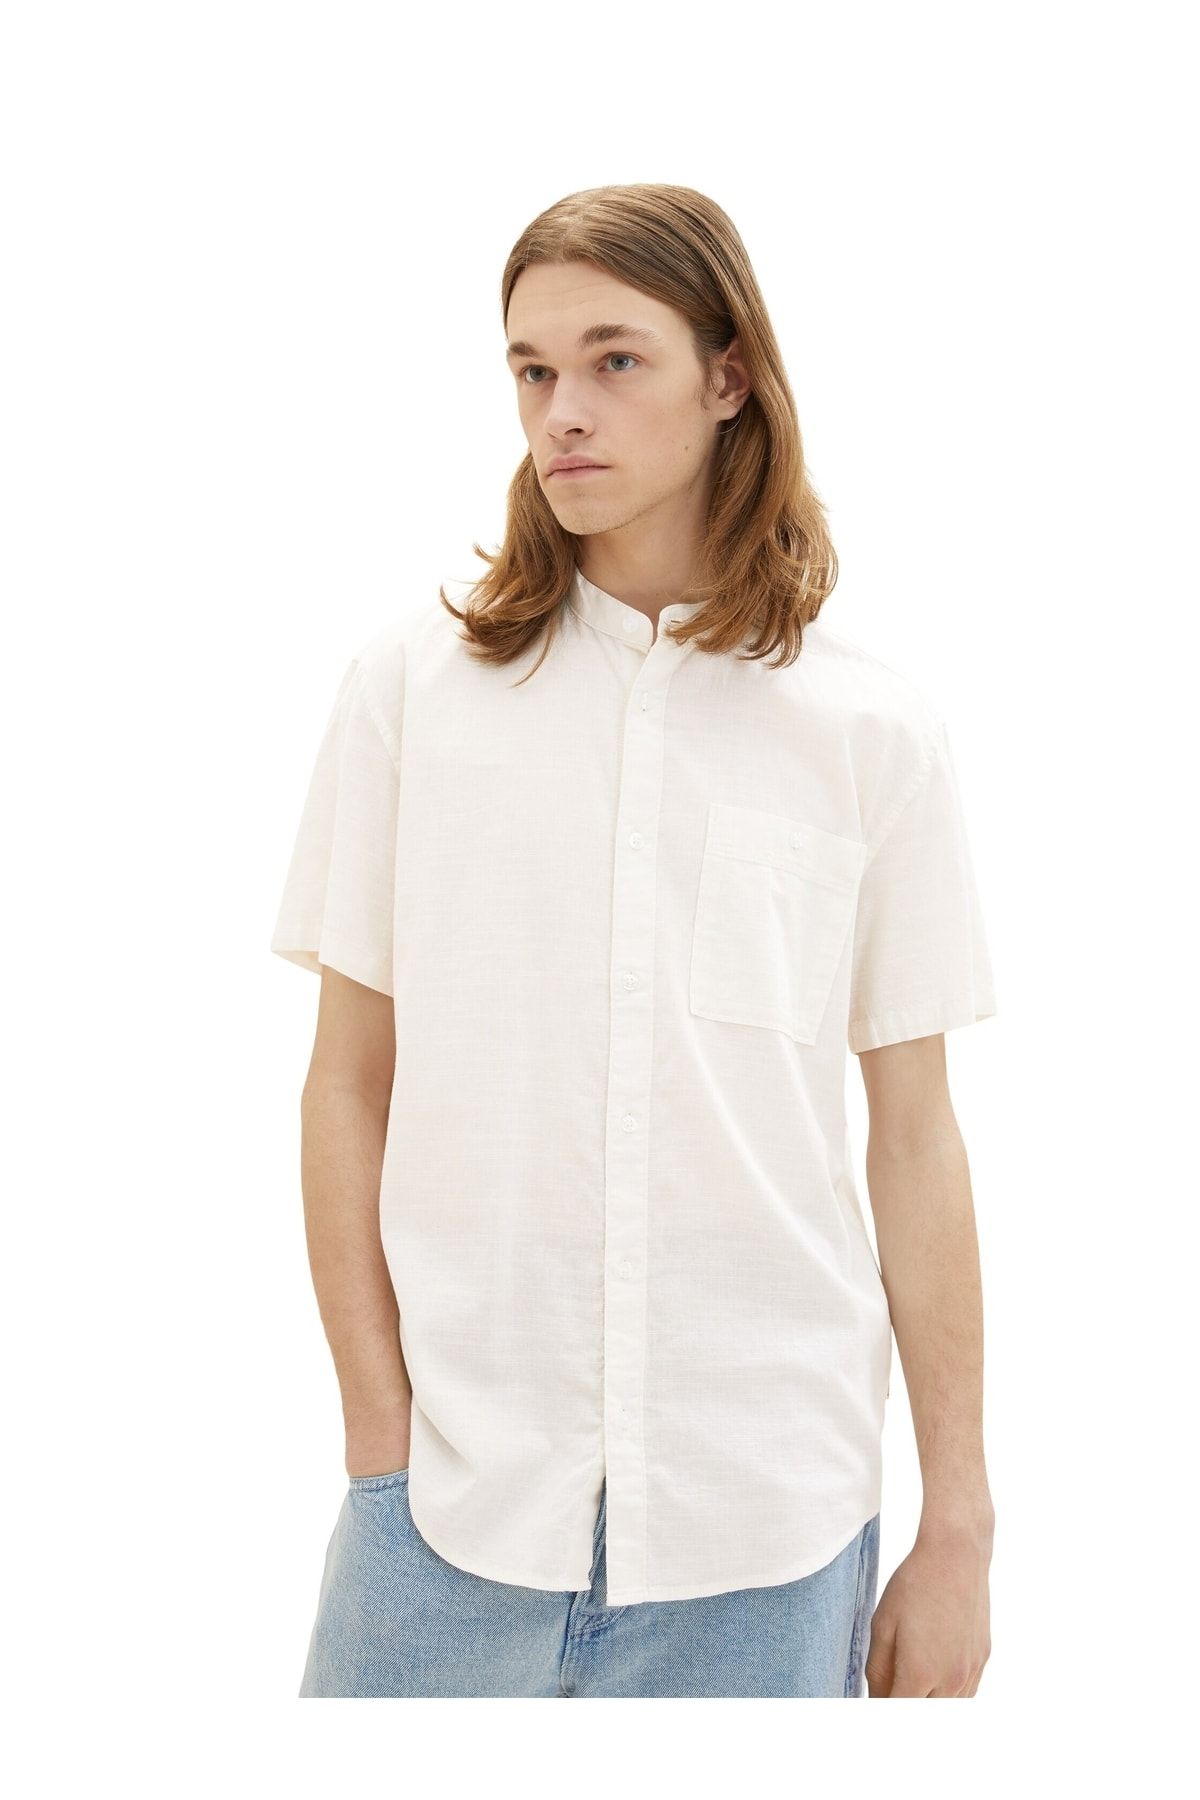 Tom Tailor - - Fit Trendyol Hemd Weiß Regular 